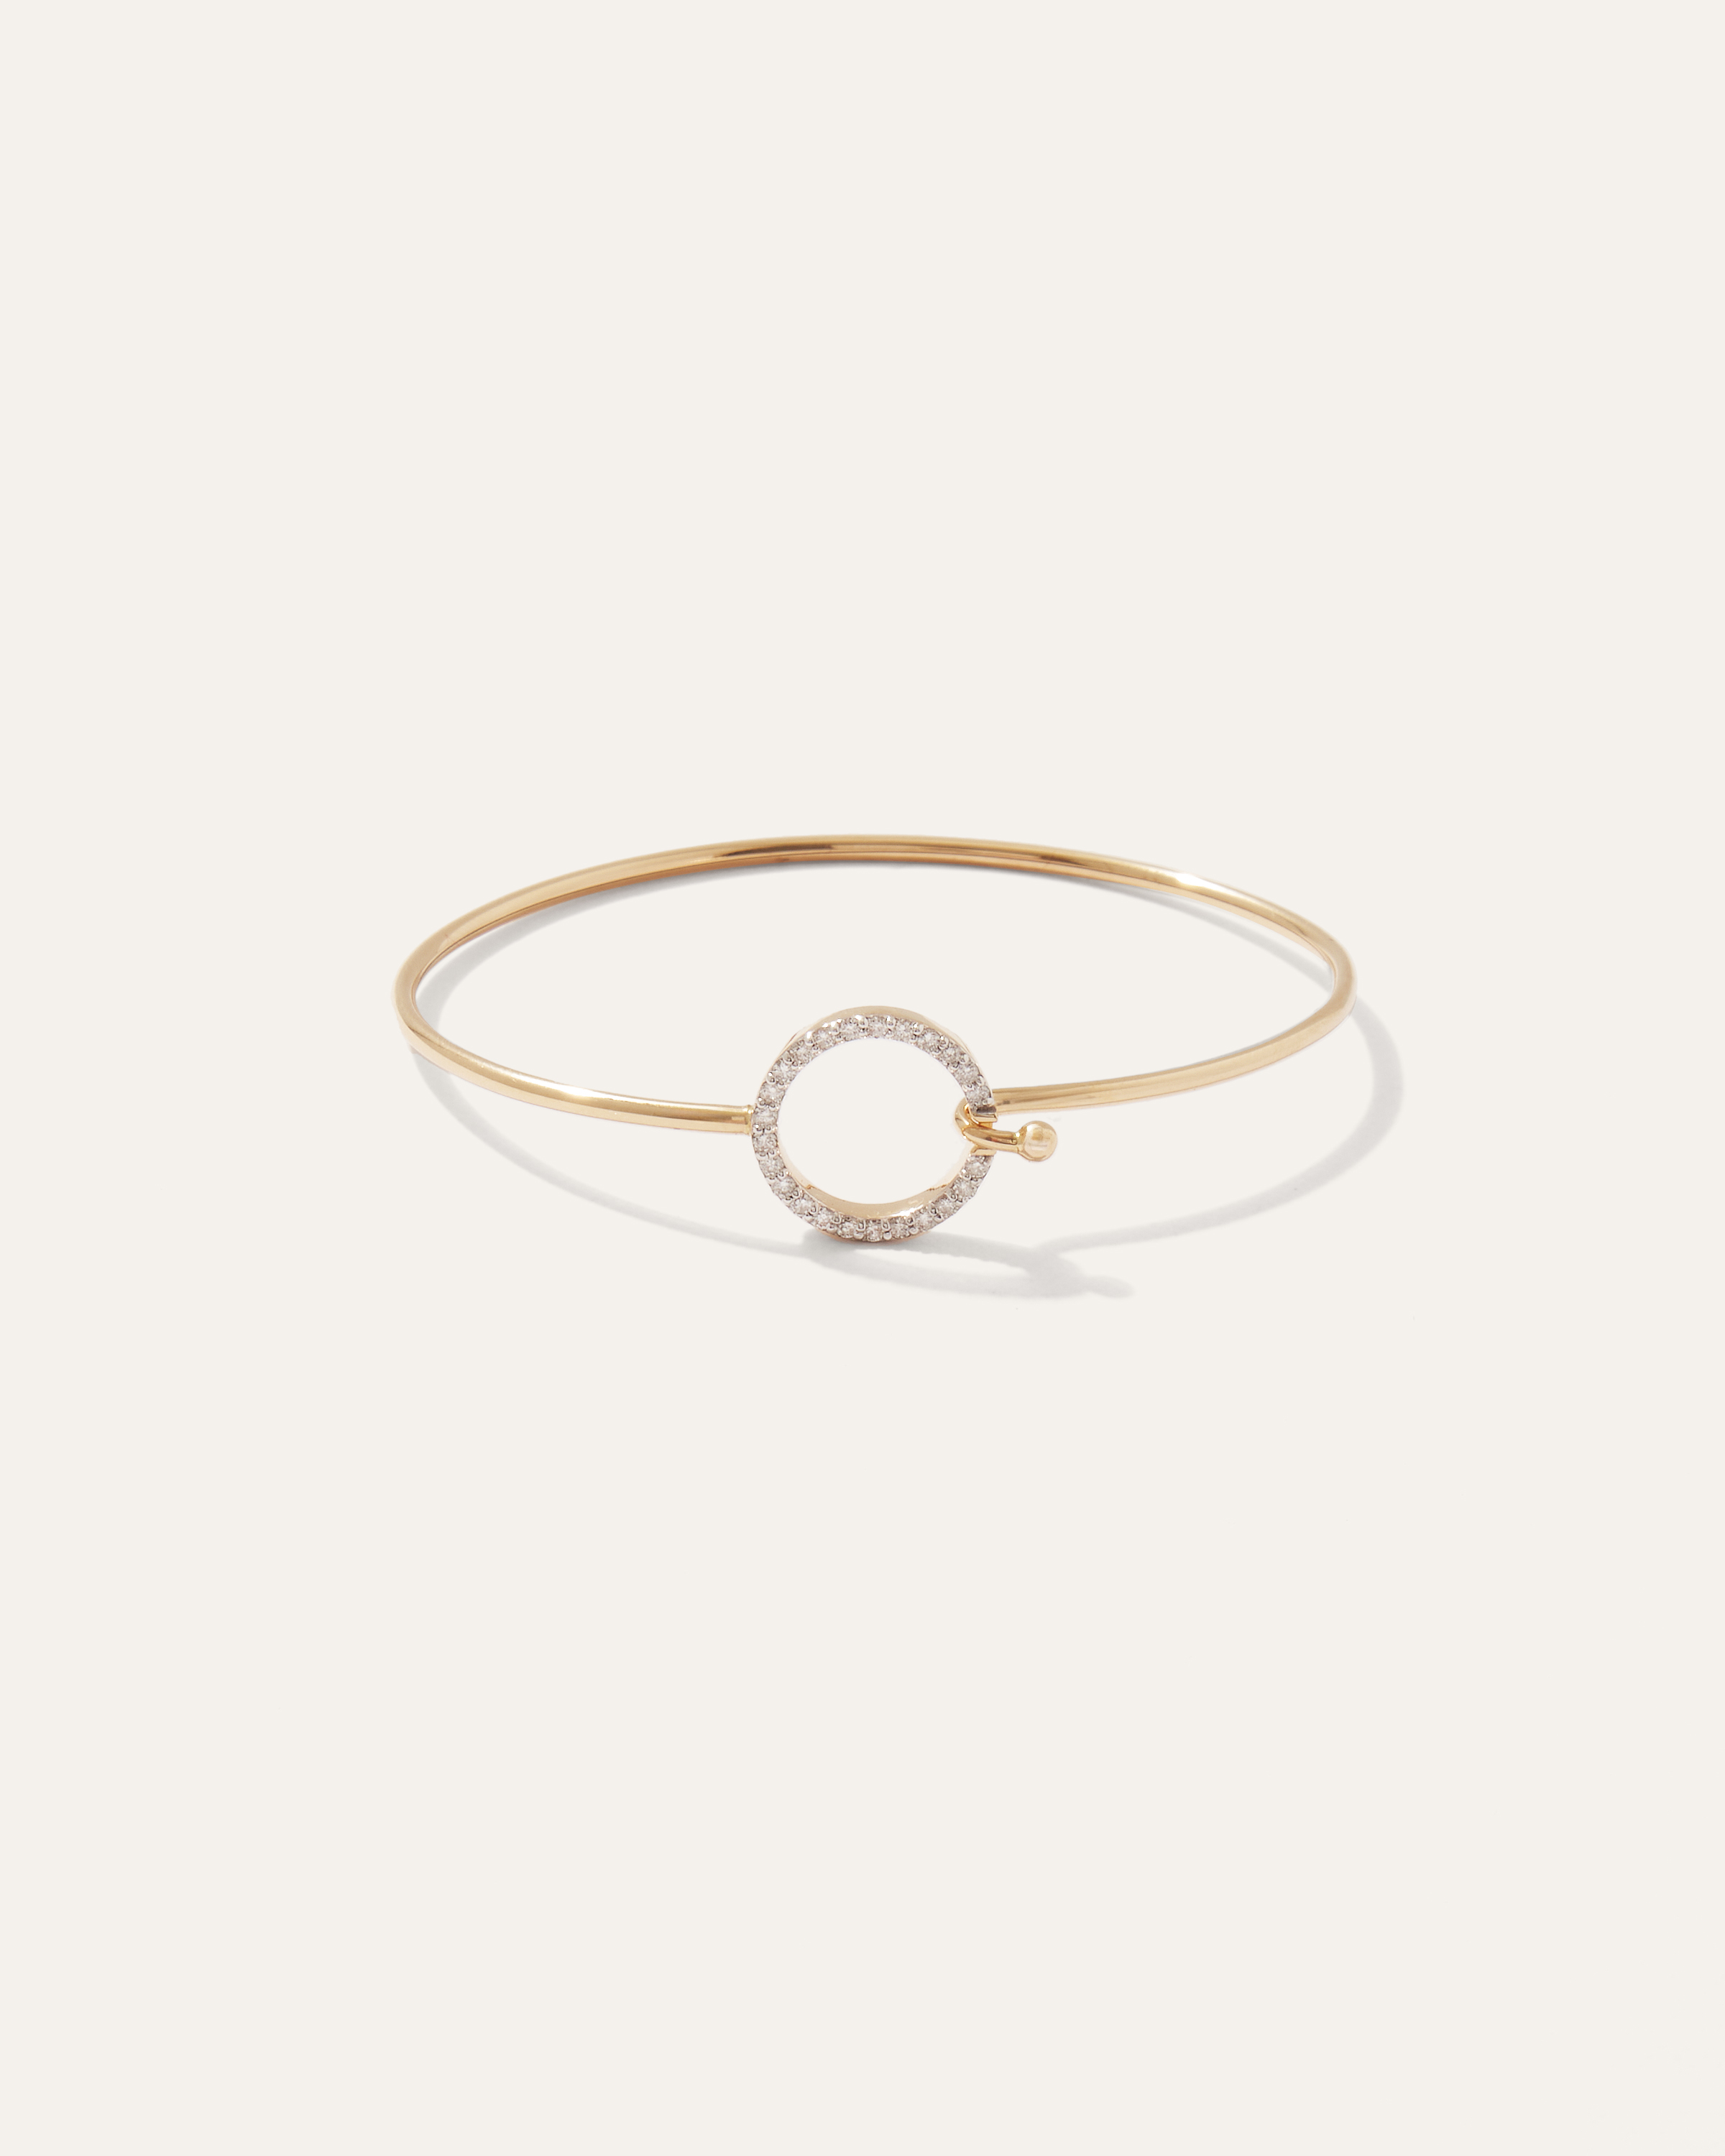 Quince Women's 14k Gold Diamond Circle Bangle Bracelet